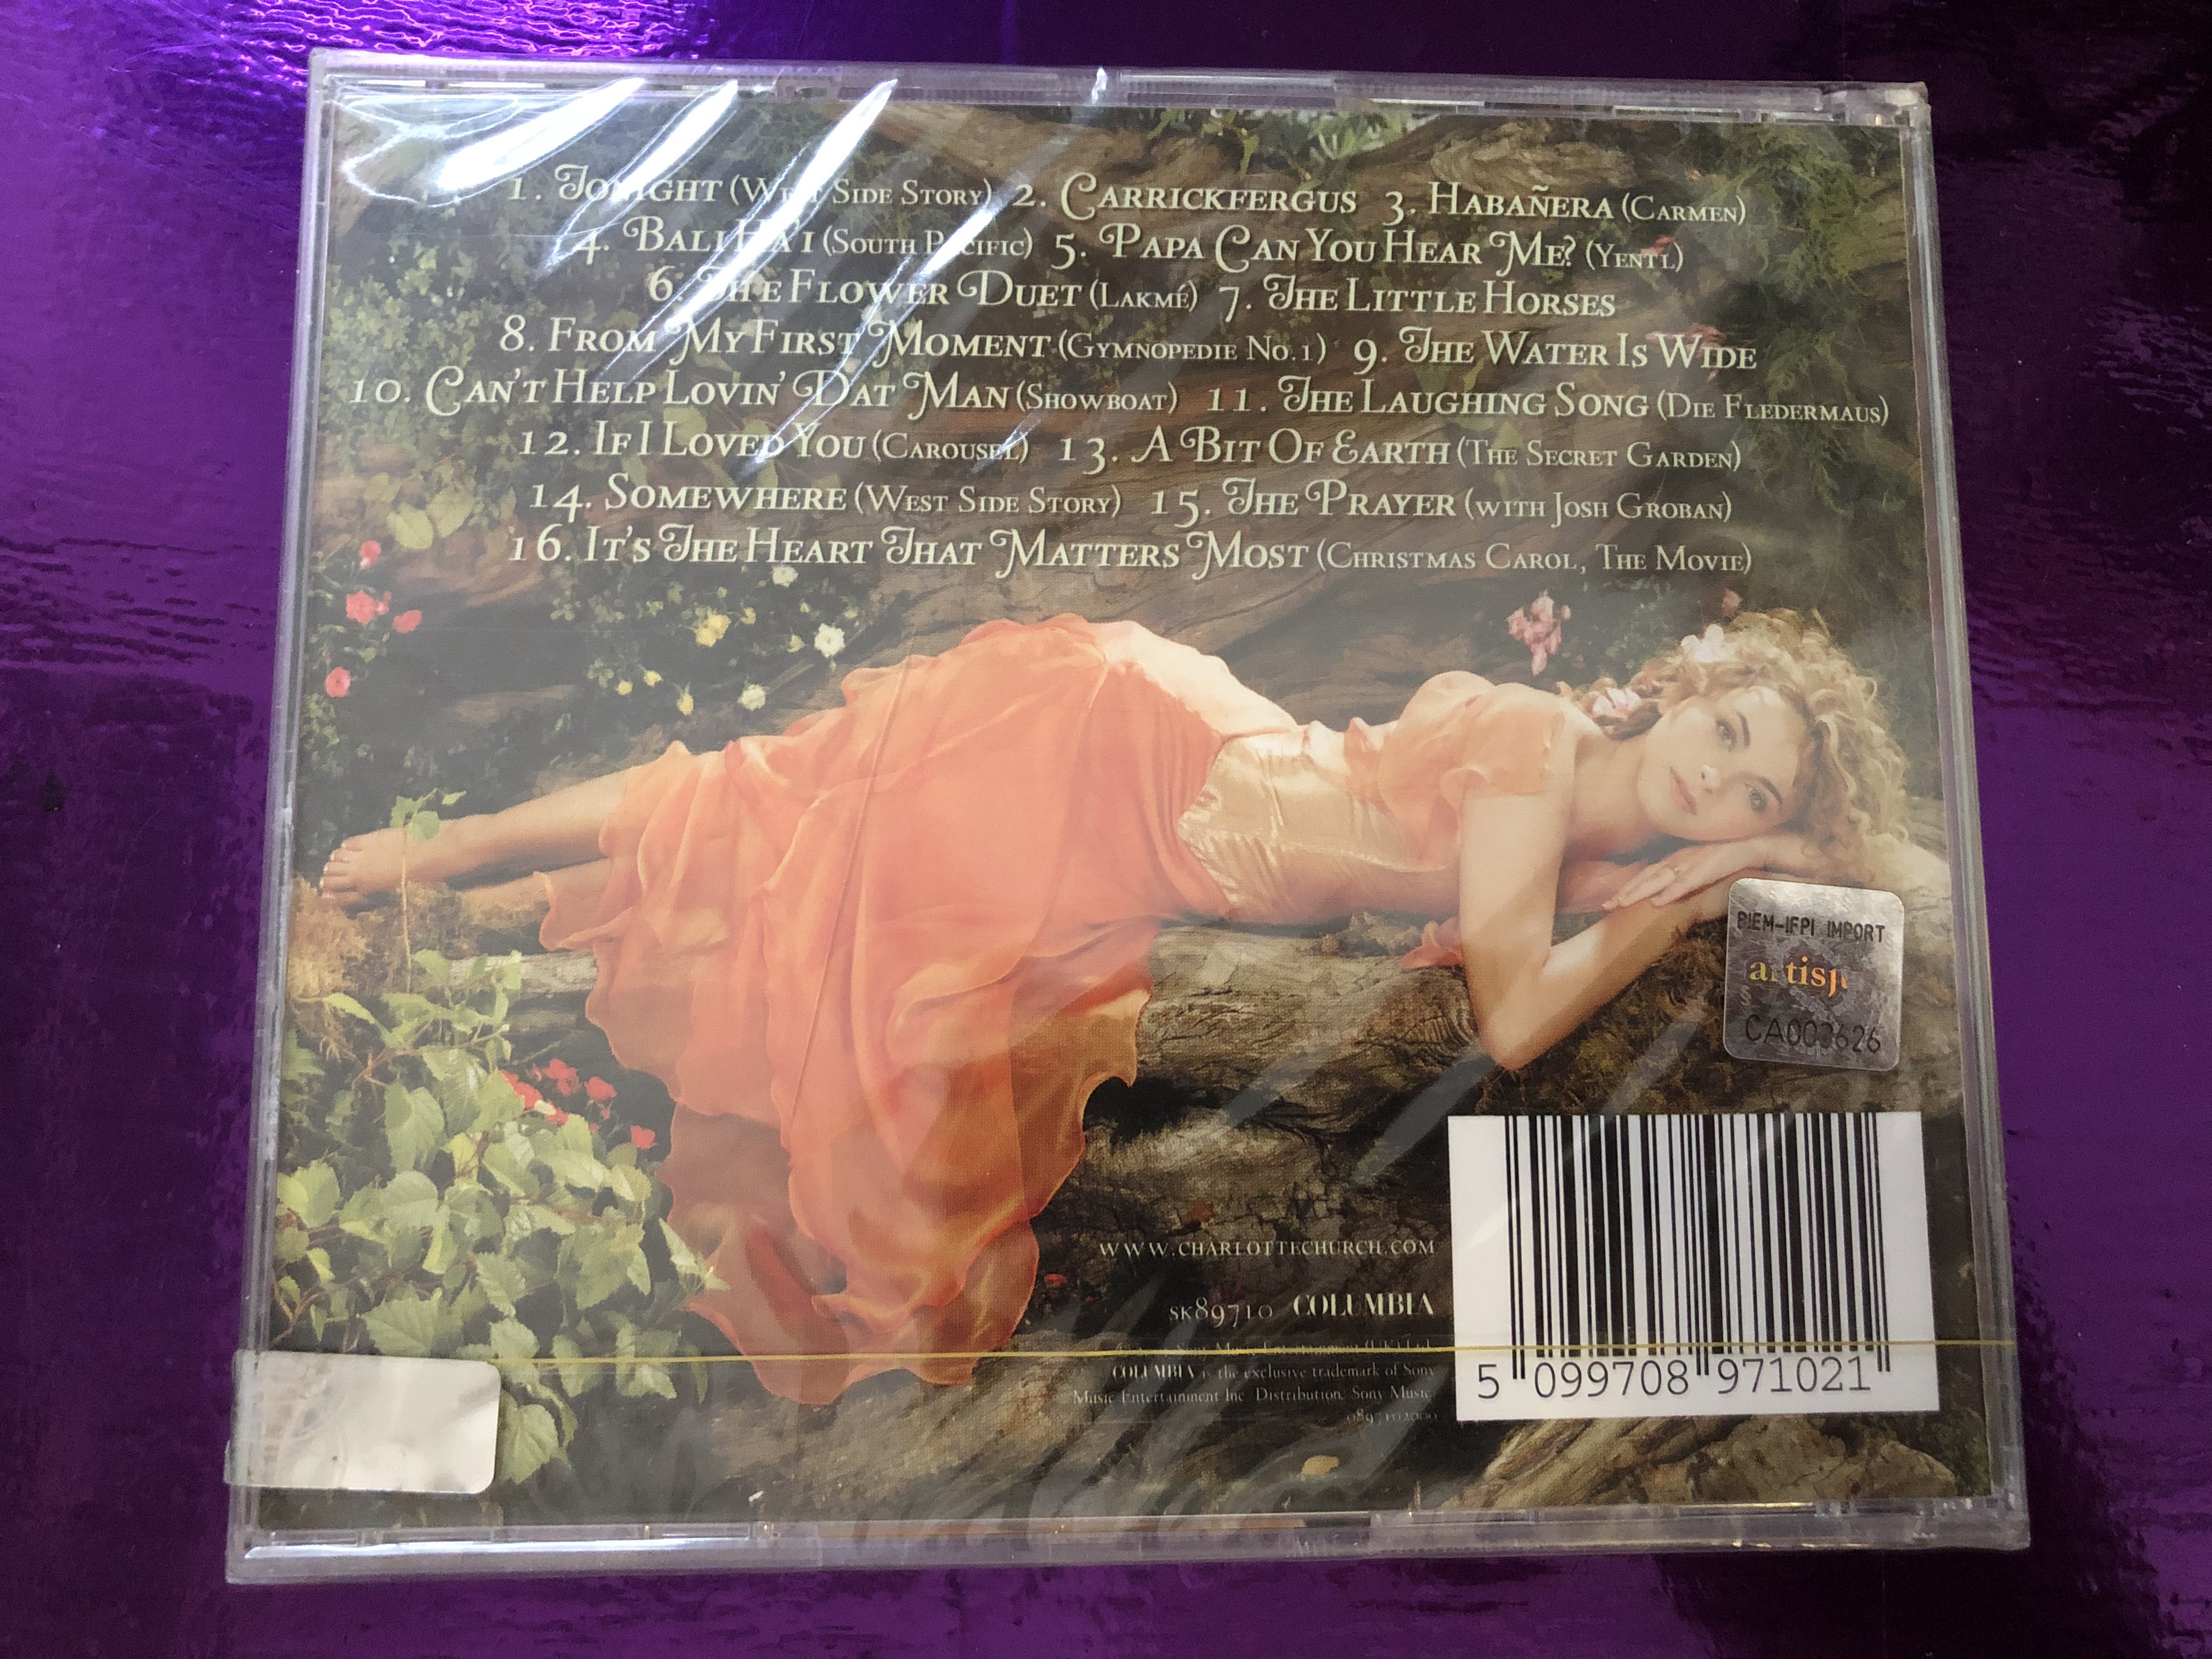 charlotte-church-enchantment-columbia-audio-cd-2001-sk89710-2-.jpg